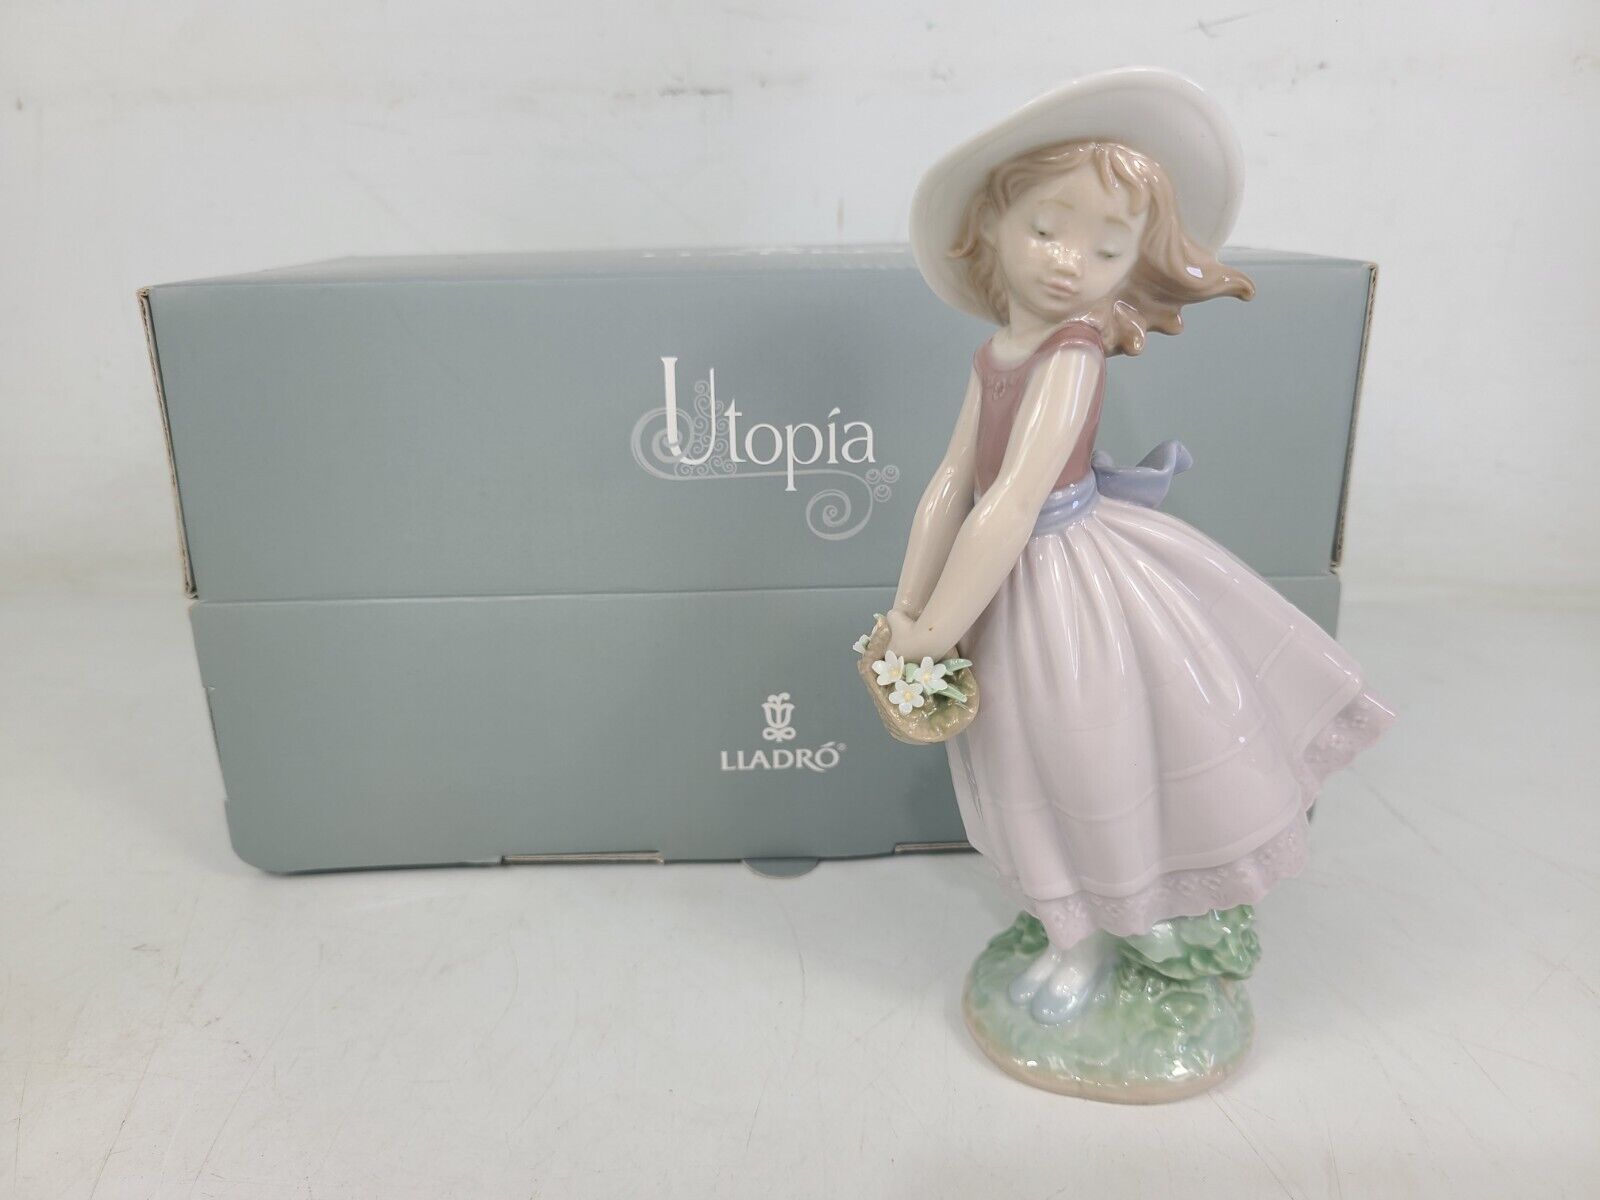 Lladro Utopia Pretty Innocence Girl Figurine 01008246 